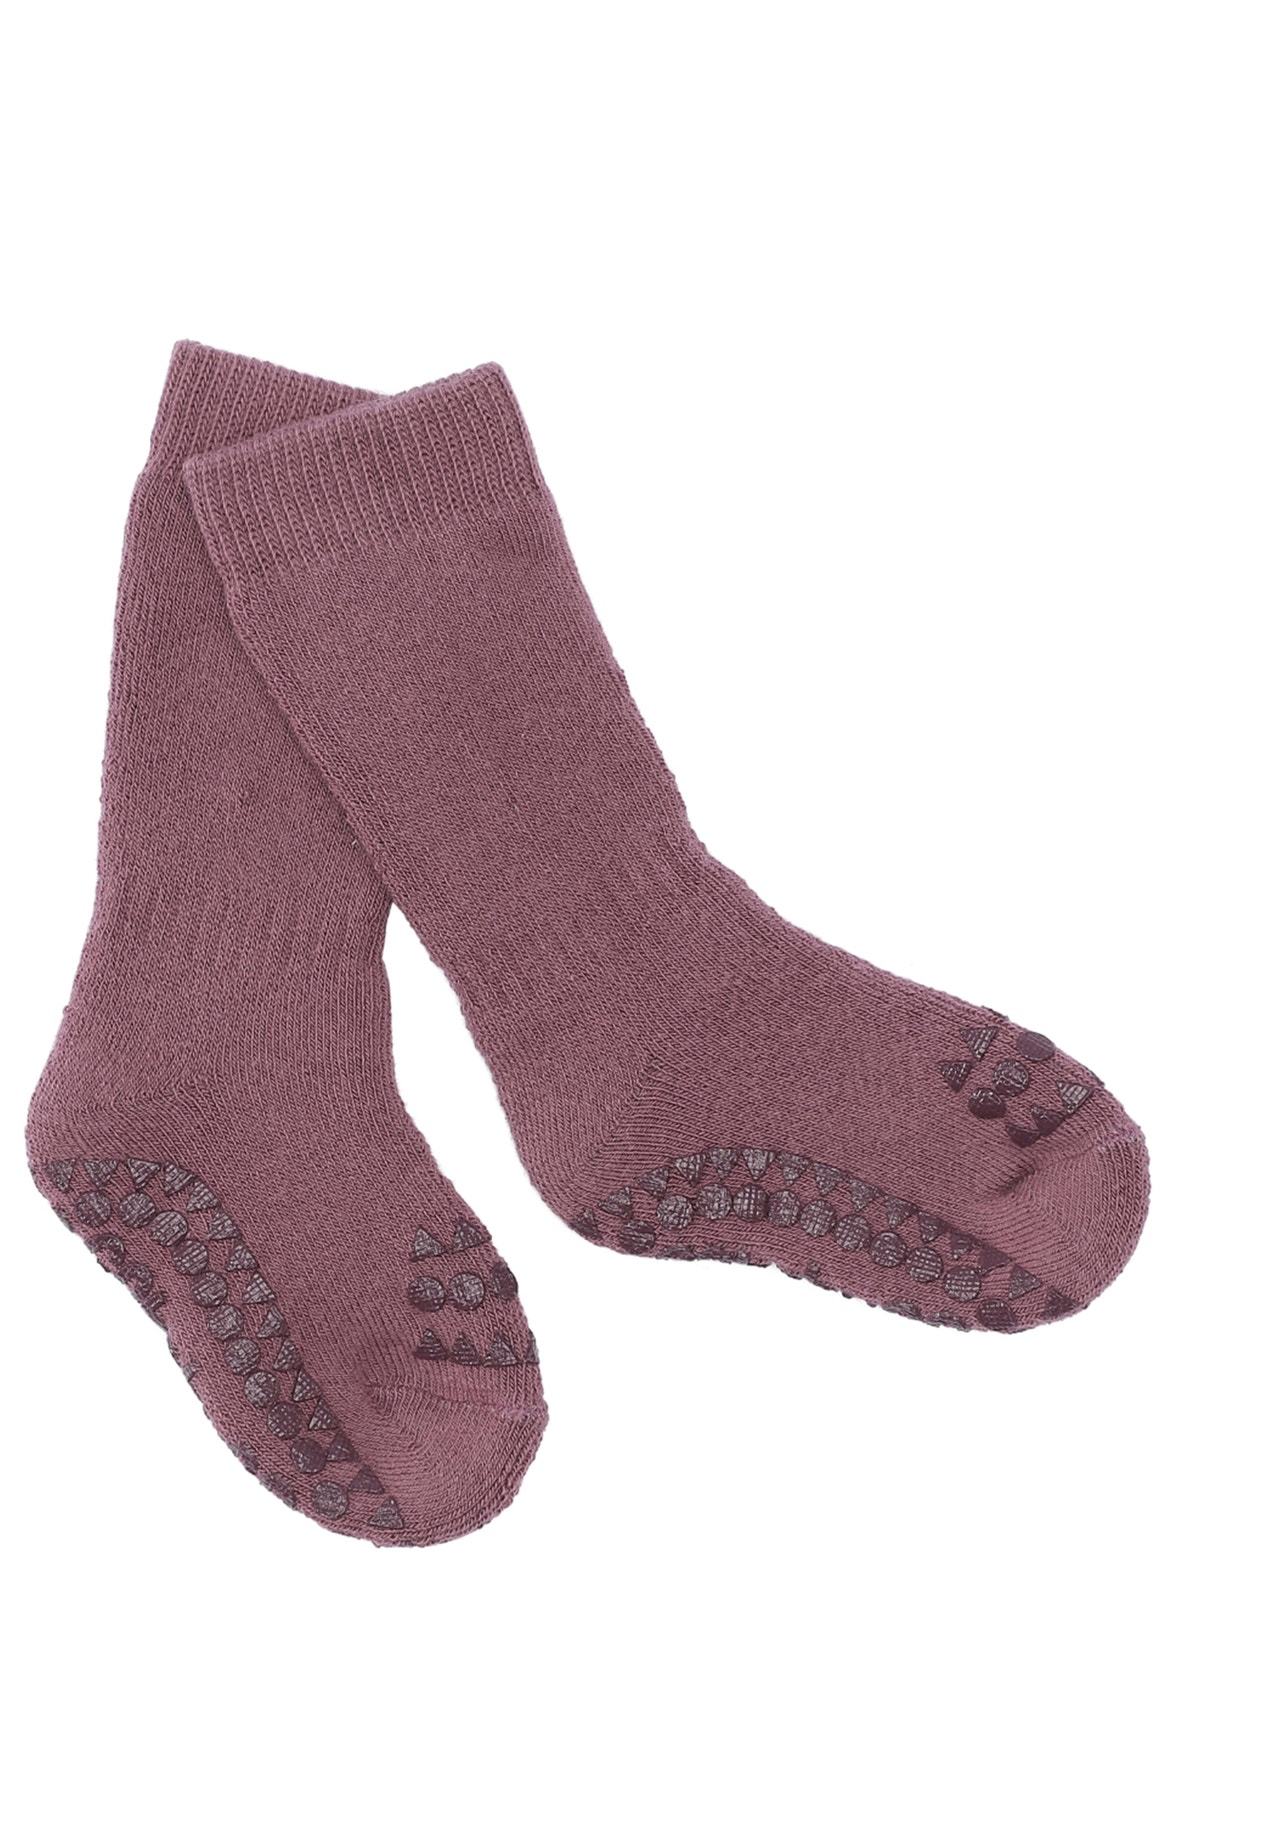 MAMA.LICIOUS Gobabygo non-slip socks -Misty Plum - 33333336